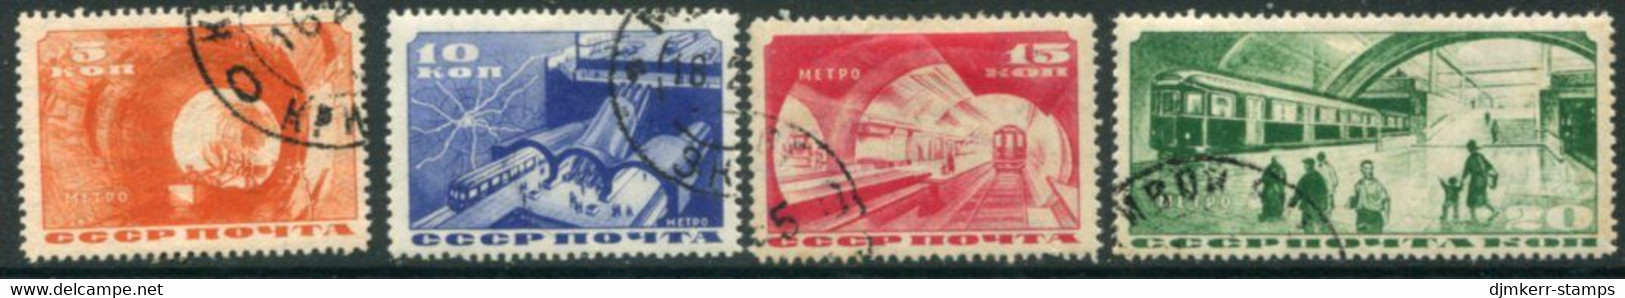 SOVIET UNION 1935 Opening Of Moscow Metro Set, Fine Used.  Michel 509-12 - Gebruikt